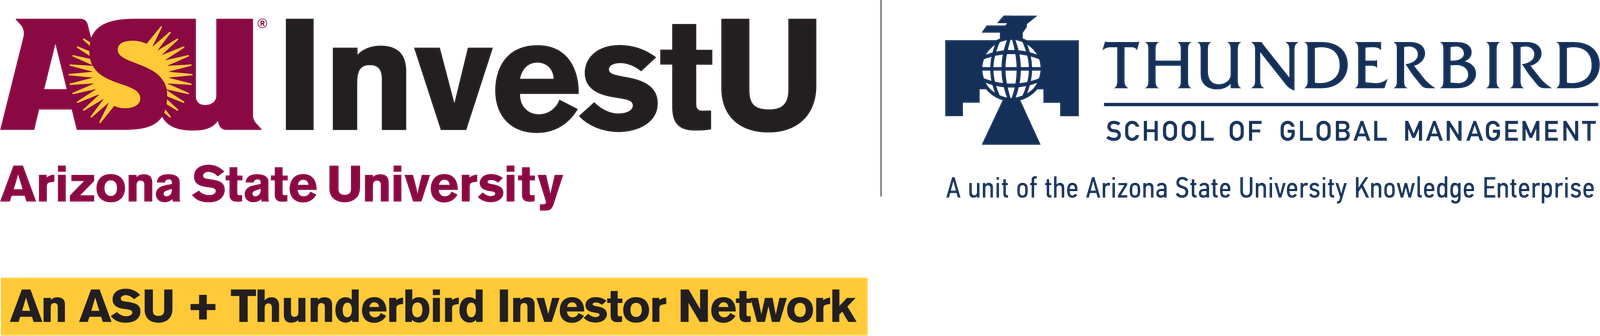 ASU-InvestU-Thunderbird-Investor-Network logo